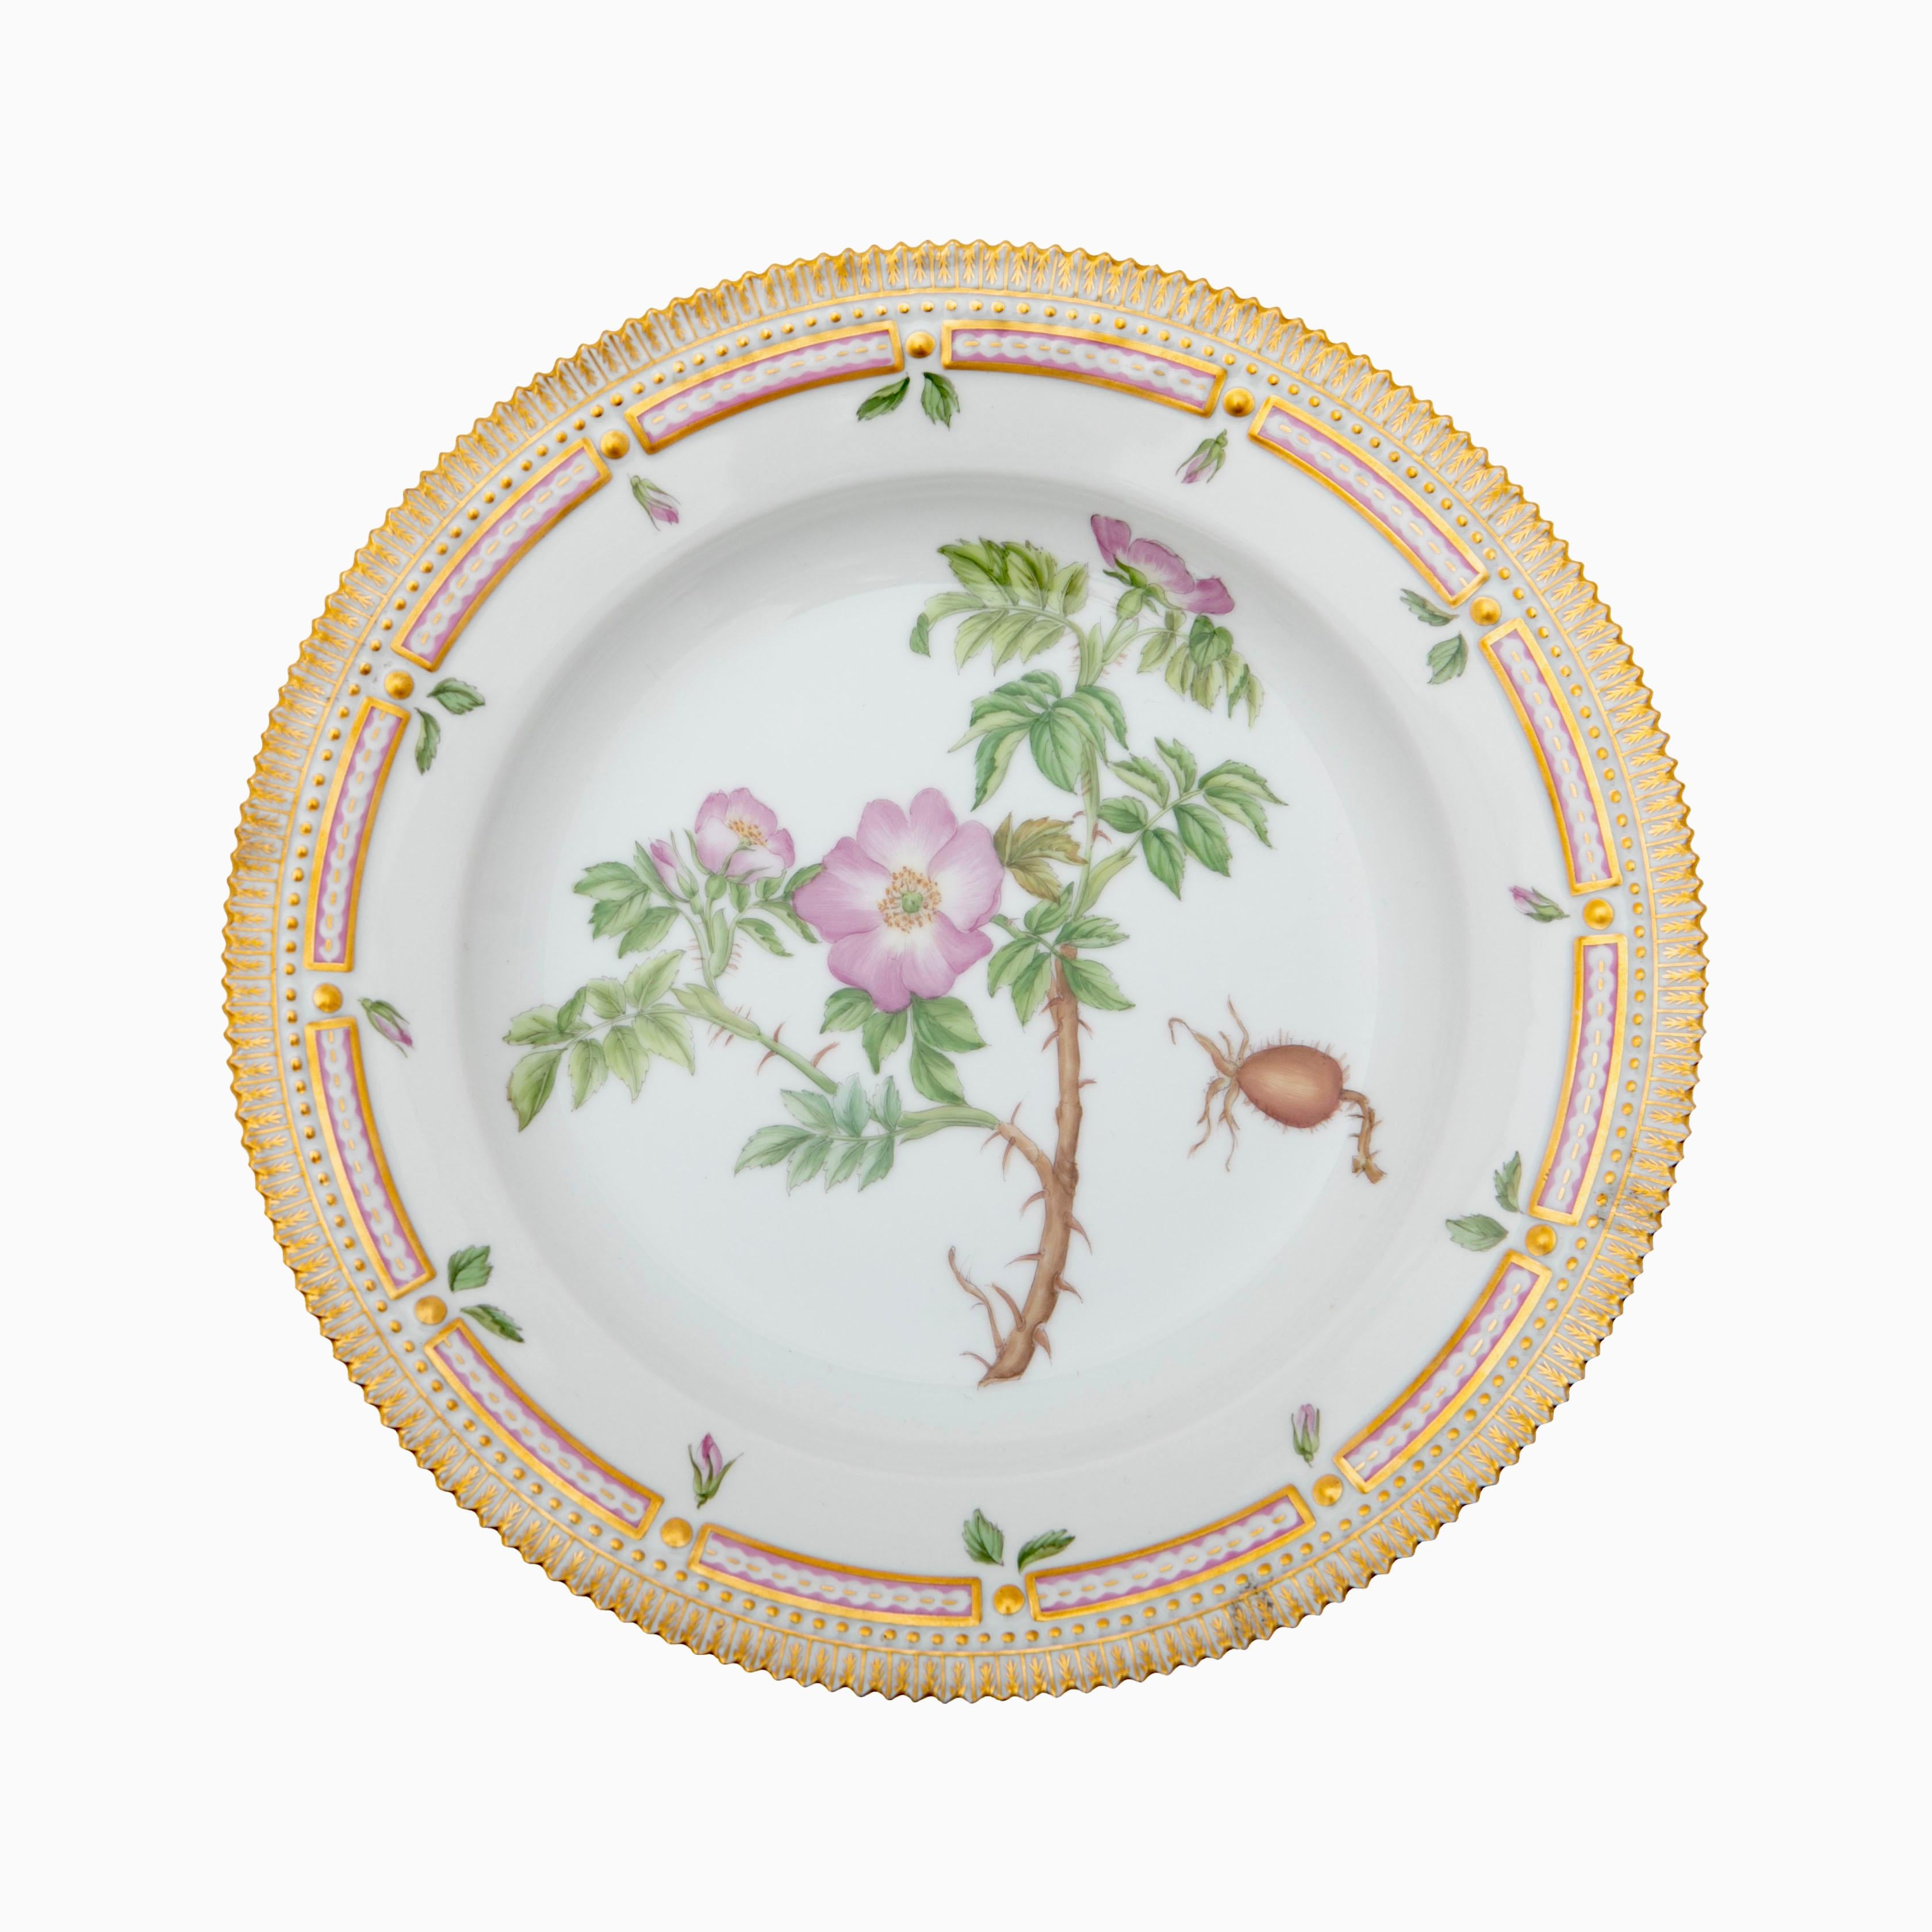 Royal Copenhagen Flora Danica dinner plate in porcelain. Hand-painted. Dia: 25.5 cm.
Features 